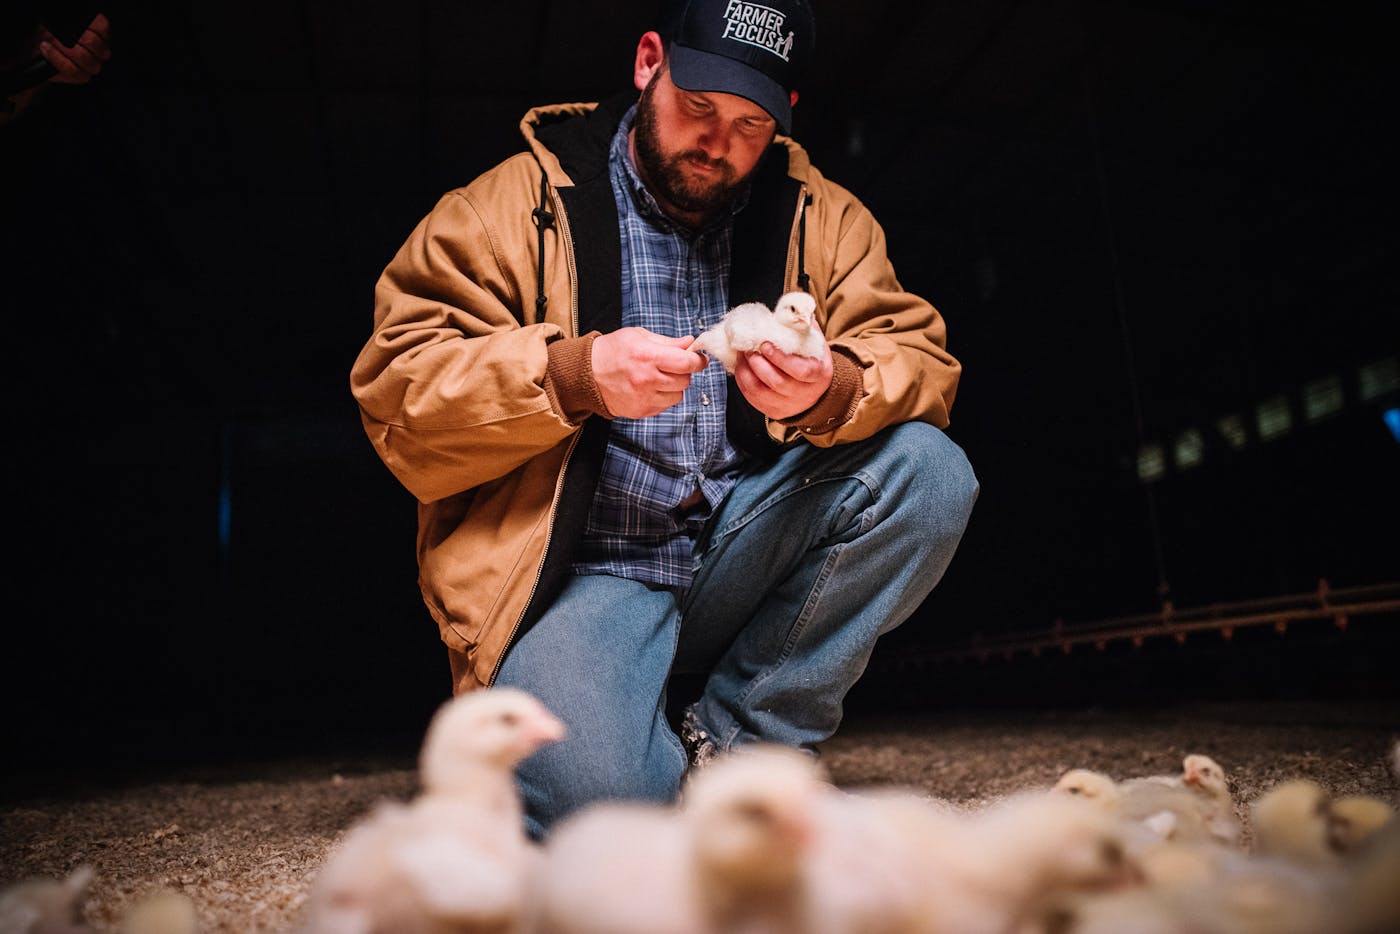 SVO Farmer With Chicken